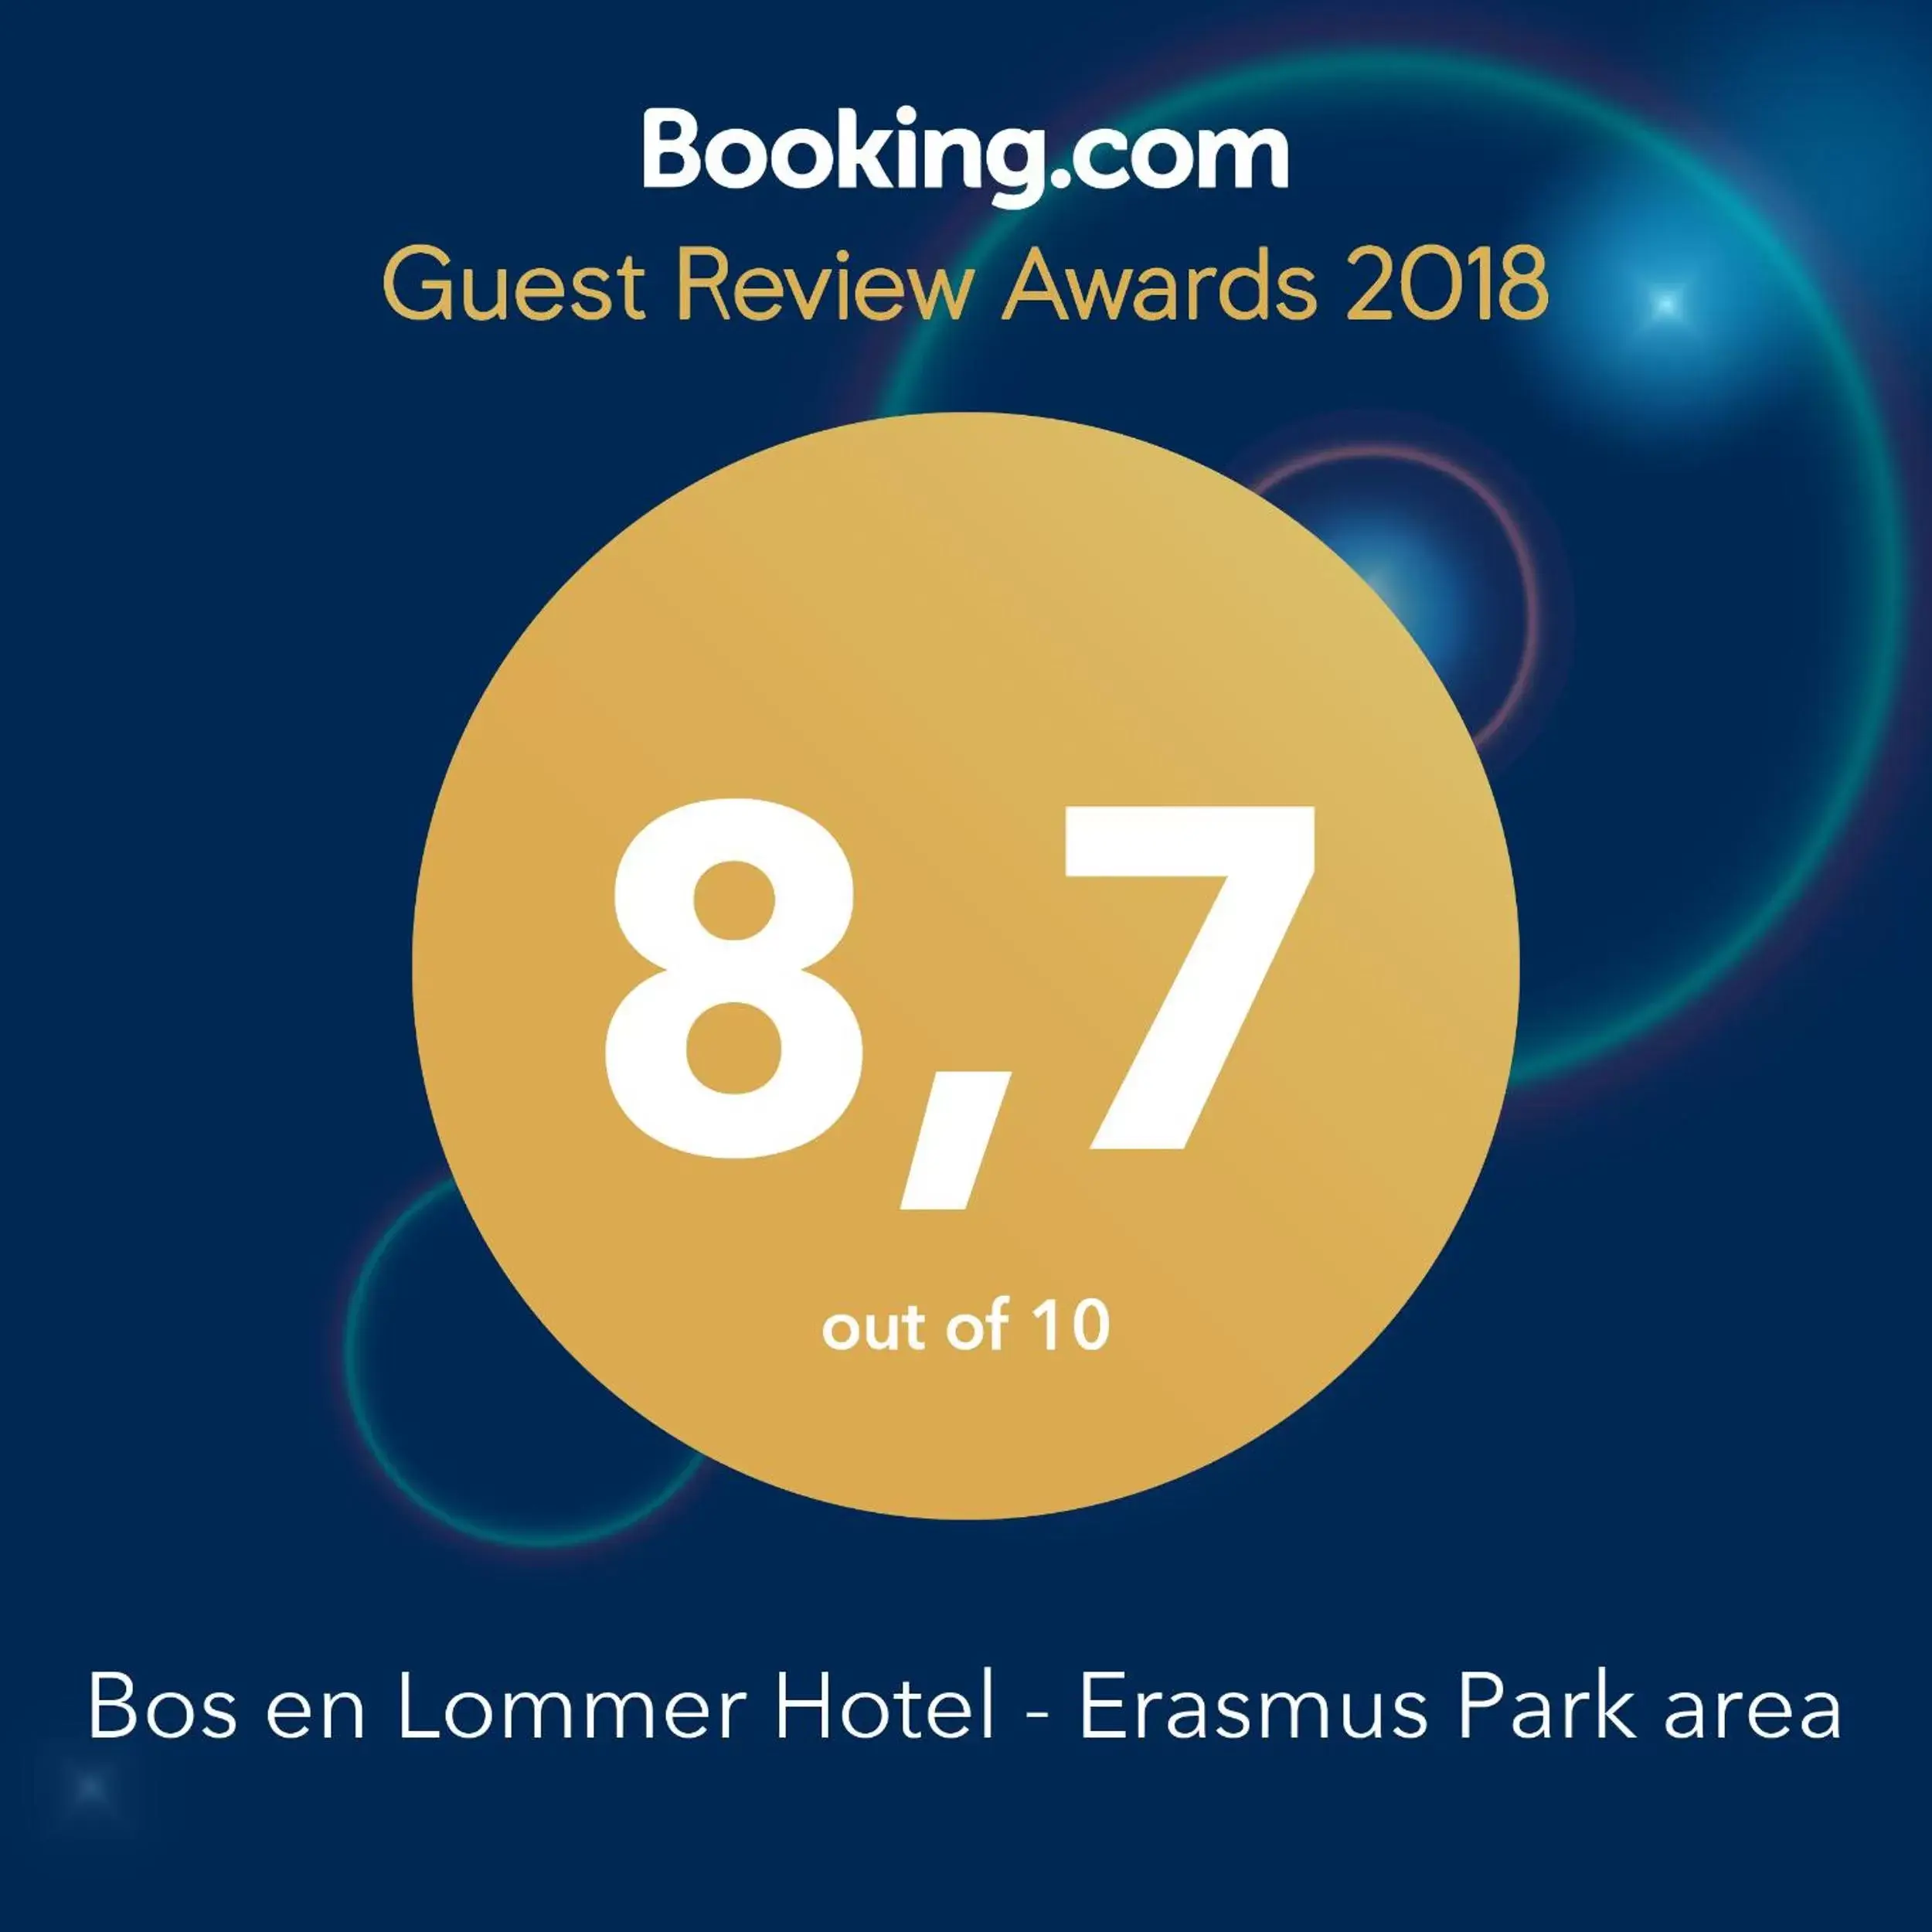 Certificate/Award in Bos en Lommer Hotel - Erasmus Park area